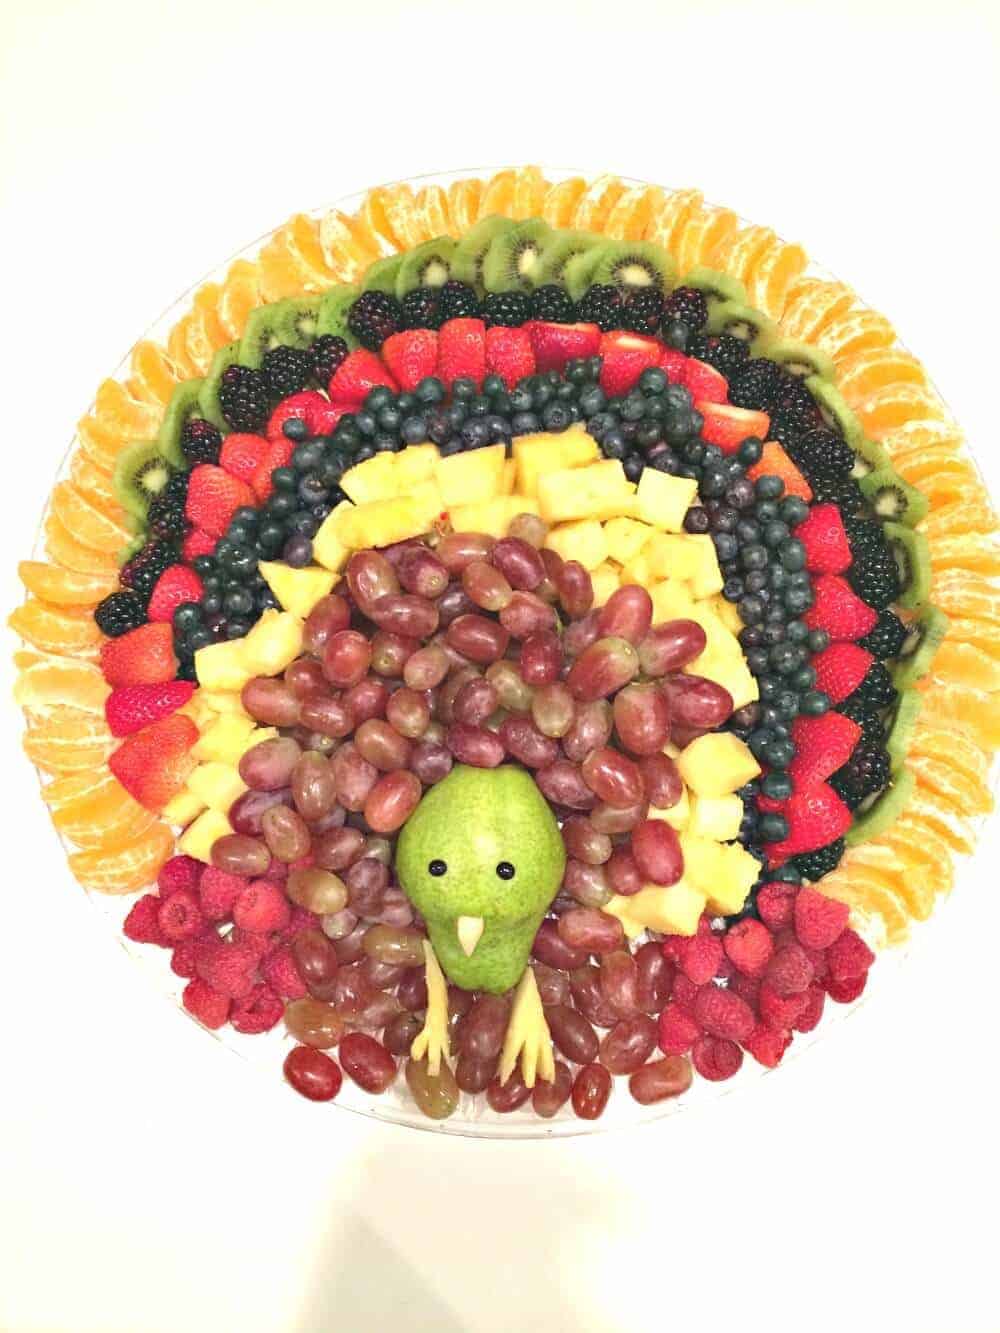 Turkey Fruit Tray